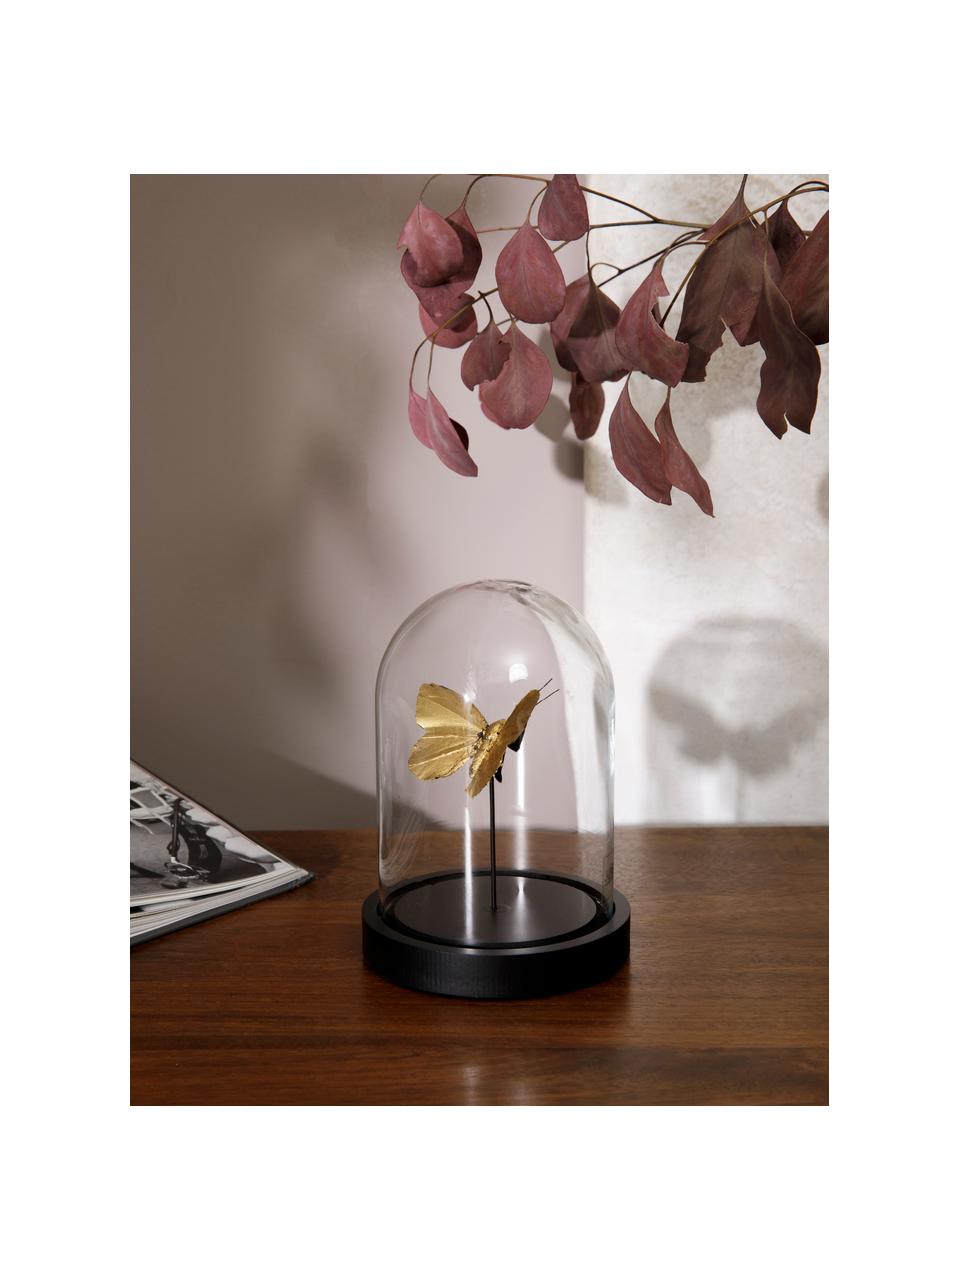 Deko-Objekt Butterfly, Glocke: Glas, Goldfarben Transparent, Schwarz, Ø 12 x H 17 cm